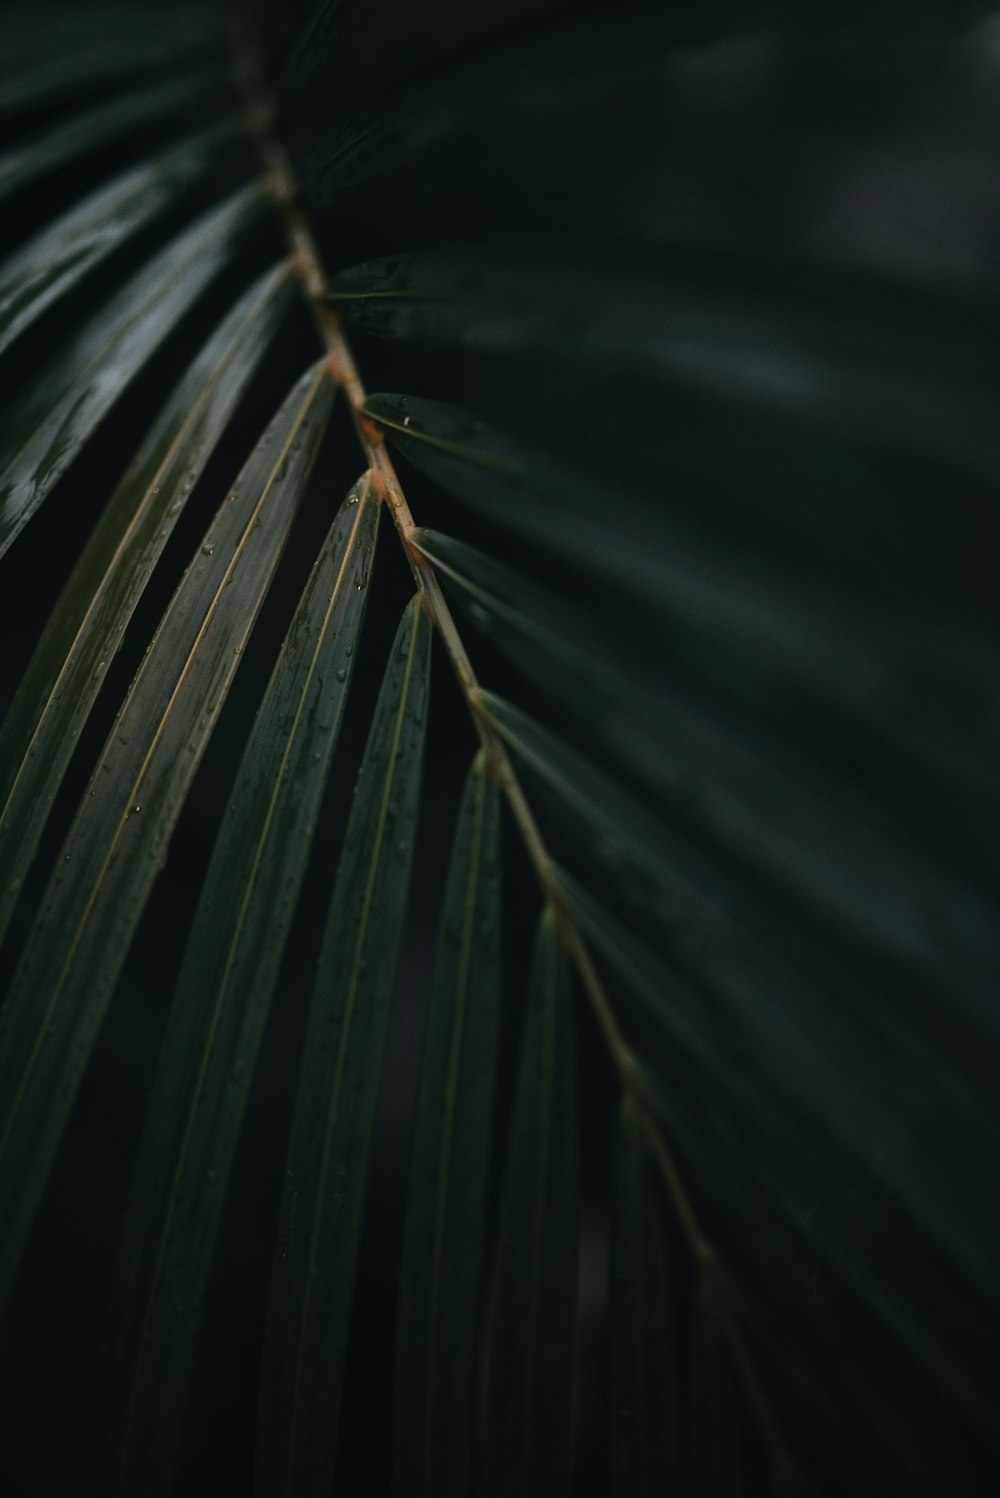 a close up of a palm leaf